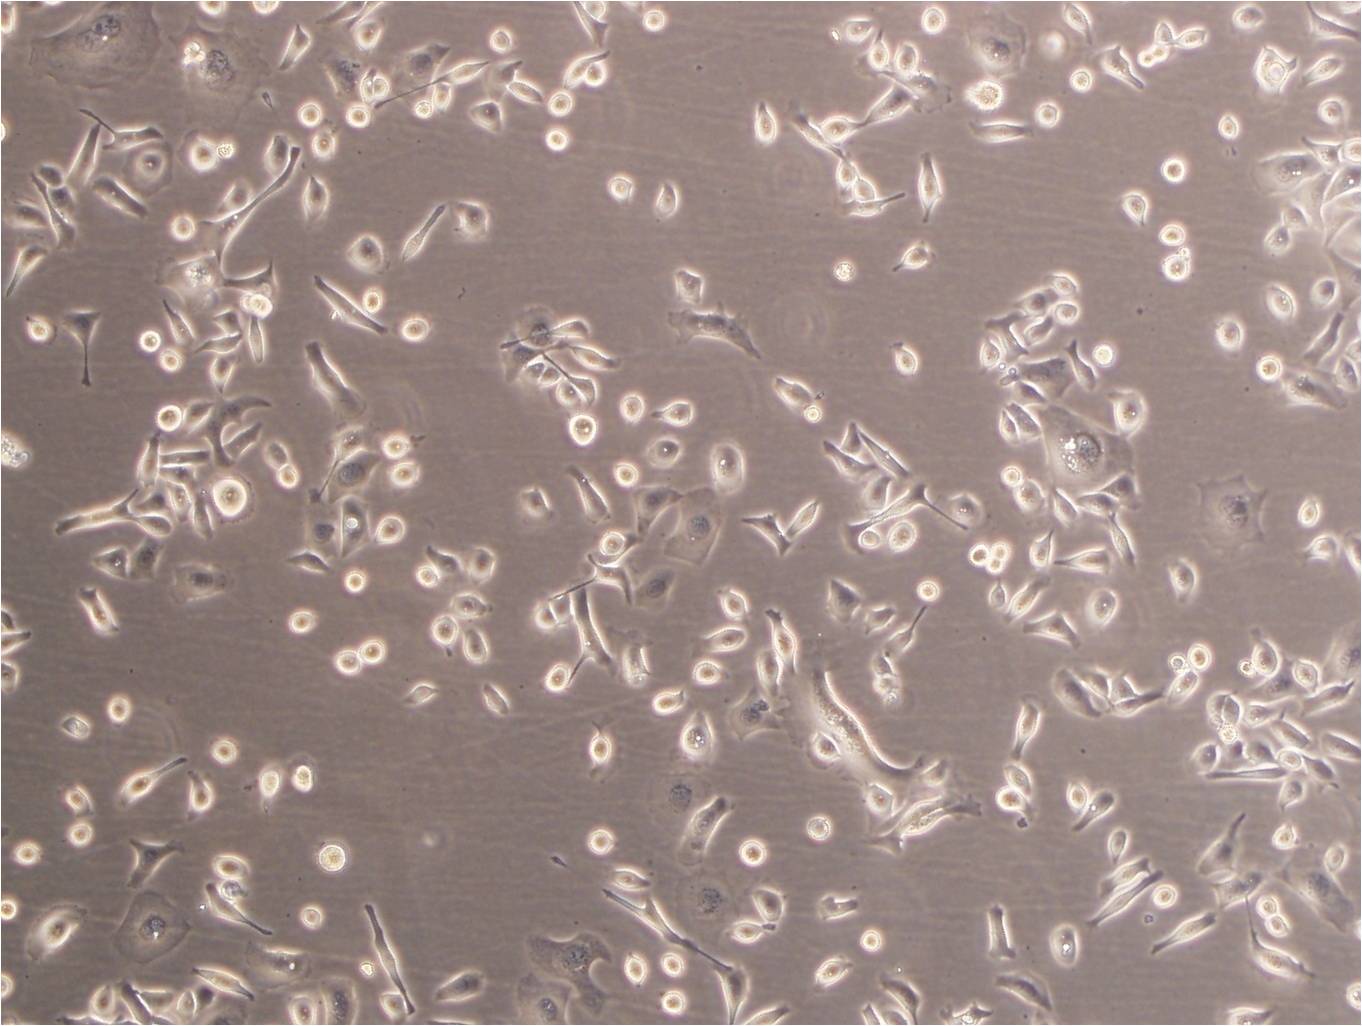 MCF-12F Cells|人乳腺上皮可传代细胞系,MCF-12F Cells